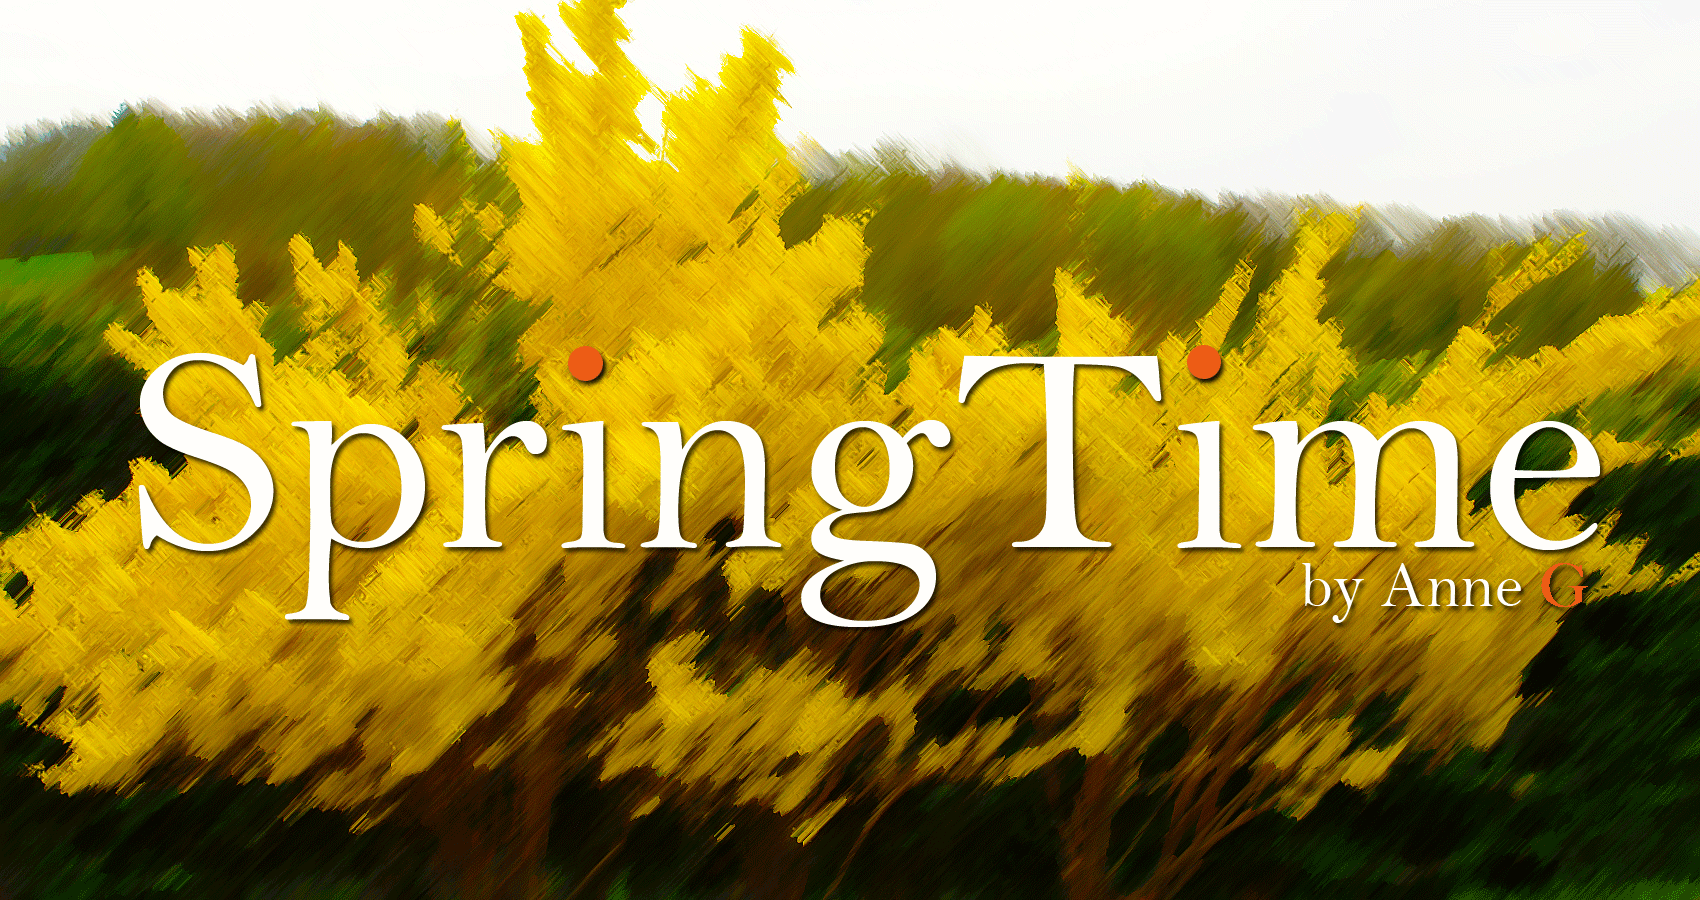 spillwords.com Springtime by Anne G